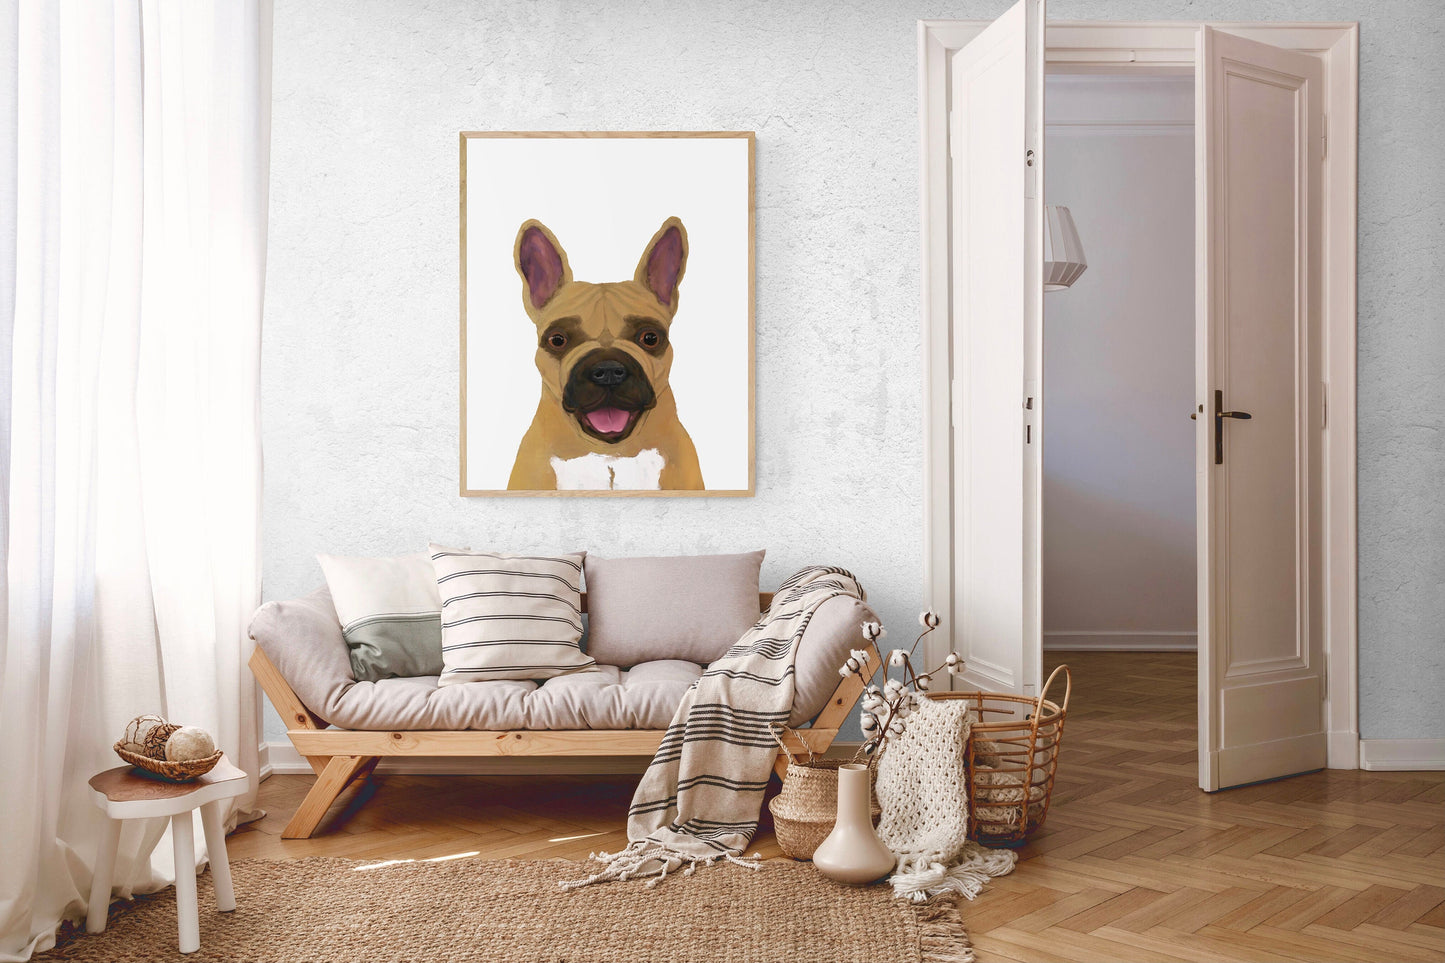 French Bulldog Print, French Bulldog Painting, Bulldog Art, Brown Dog Print, Living Room Wall Art, Bedroom Wall Print, Puppy Home Decor